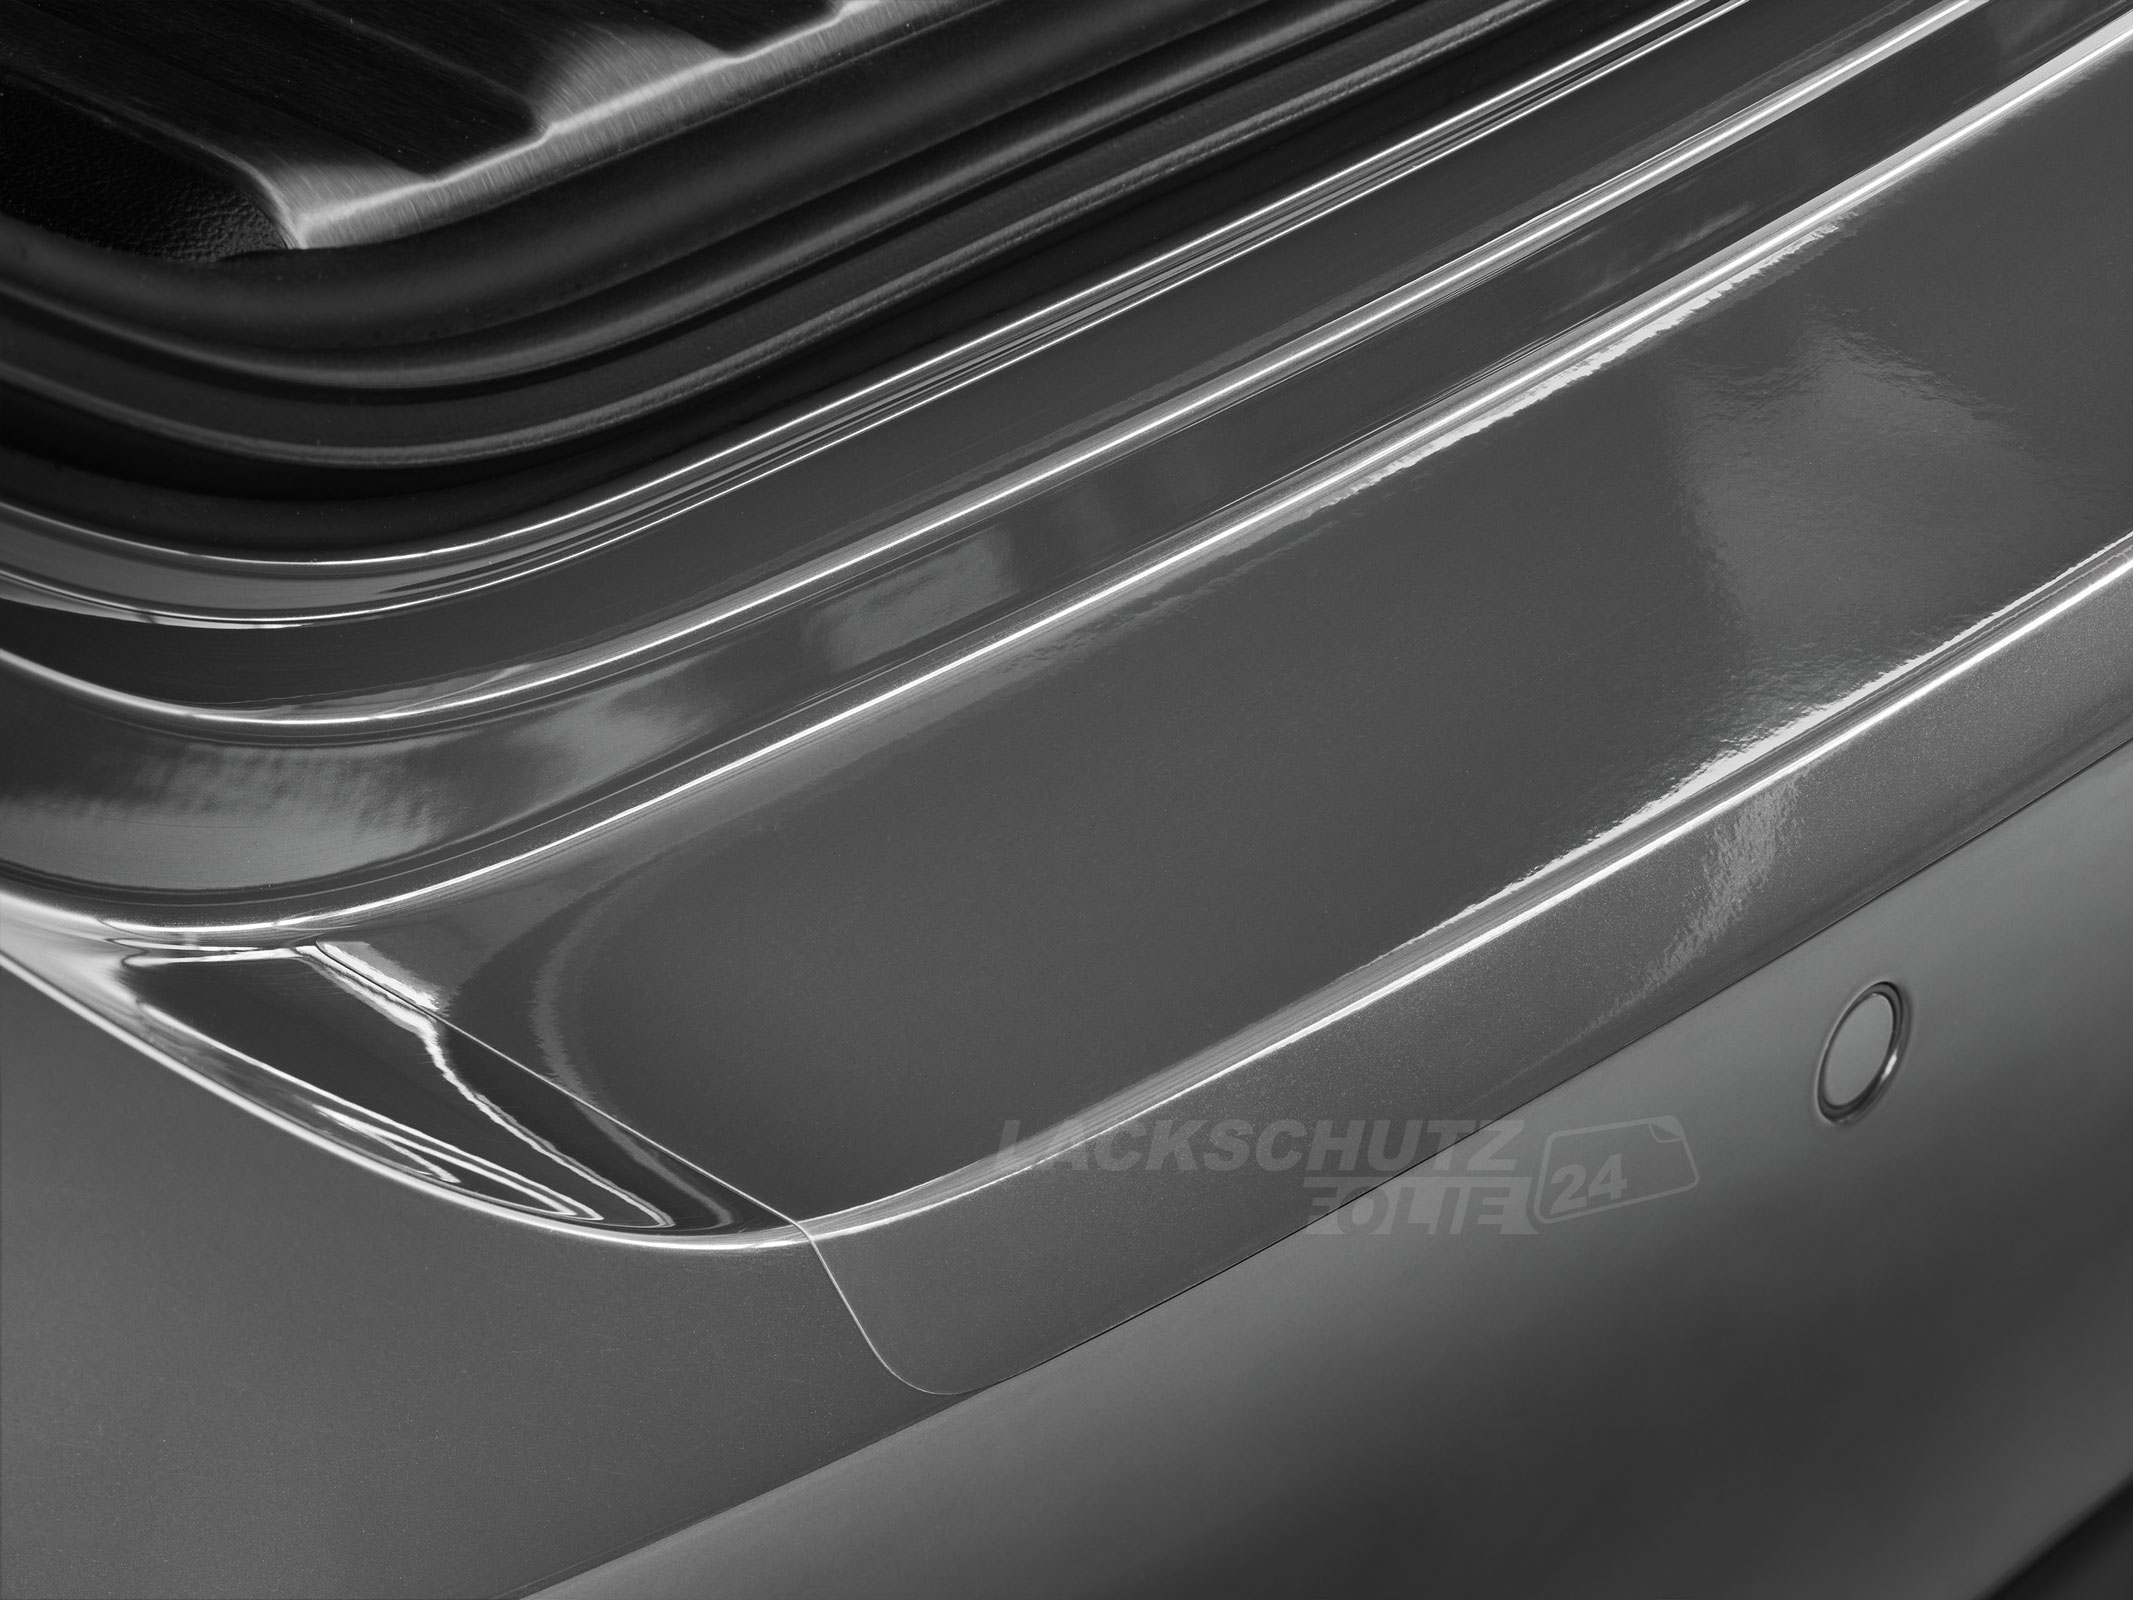 Ladekantenschutzfolie - Transparent Glatt Hochglänzend 240 µm stark für Peugeot 807 BJ 2002-2014